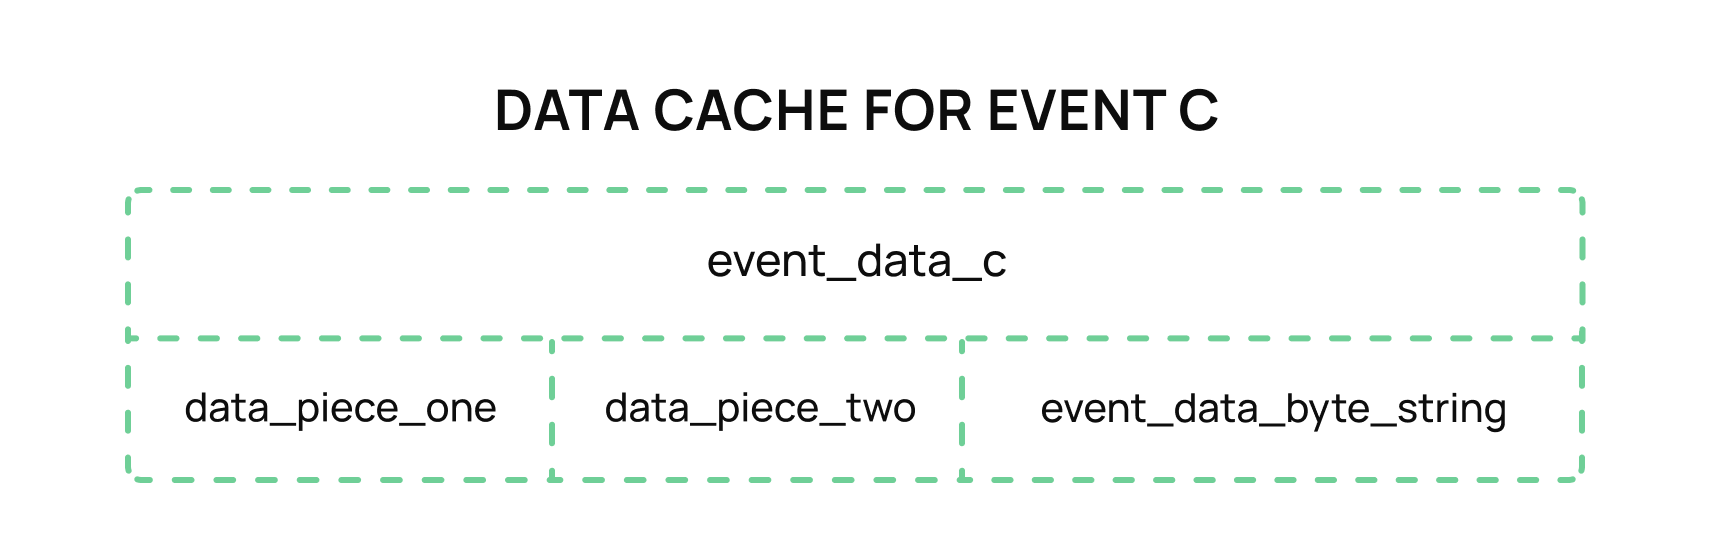 data-cache-event-c